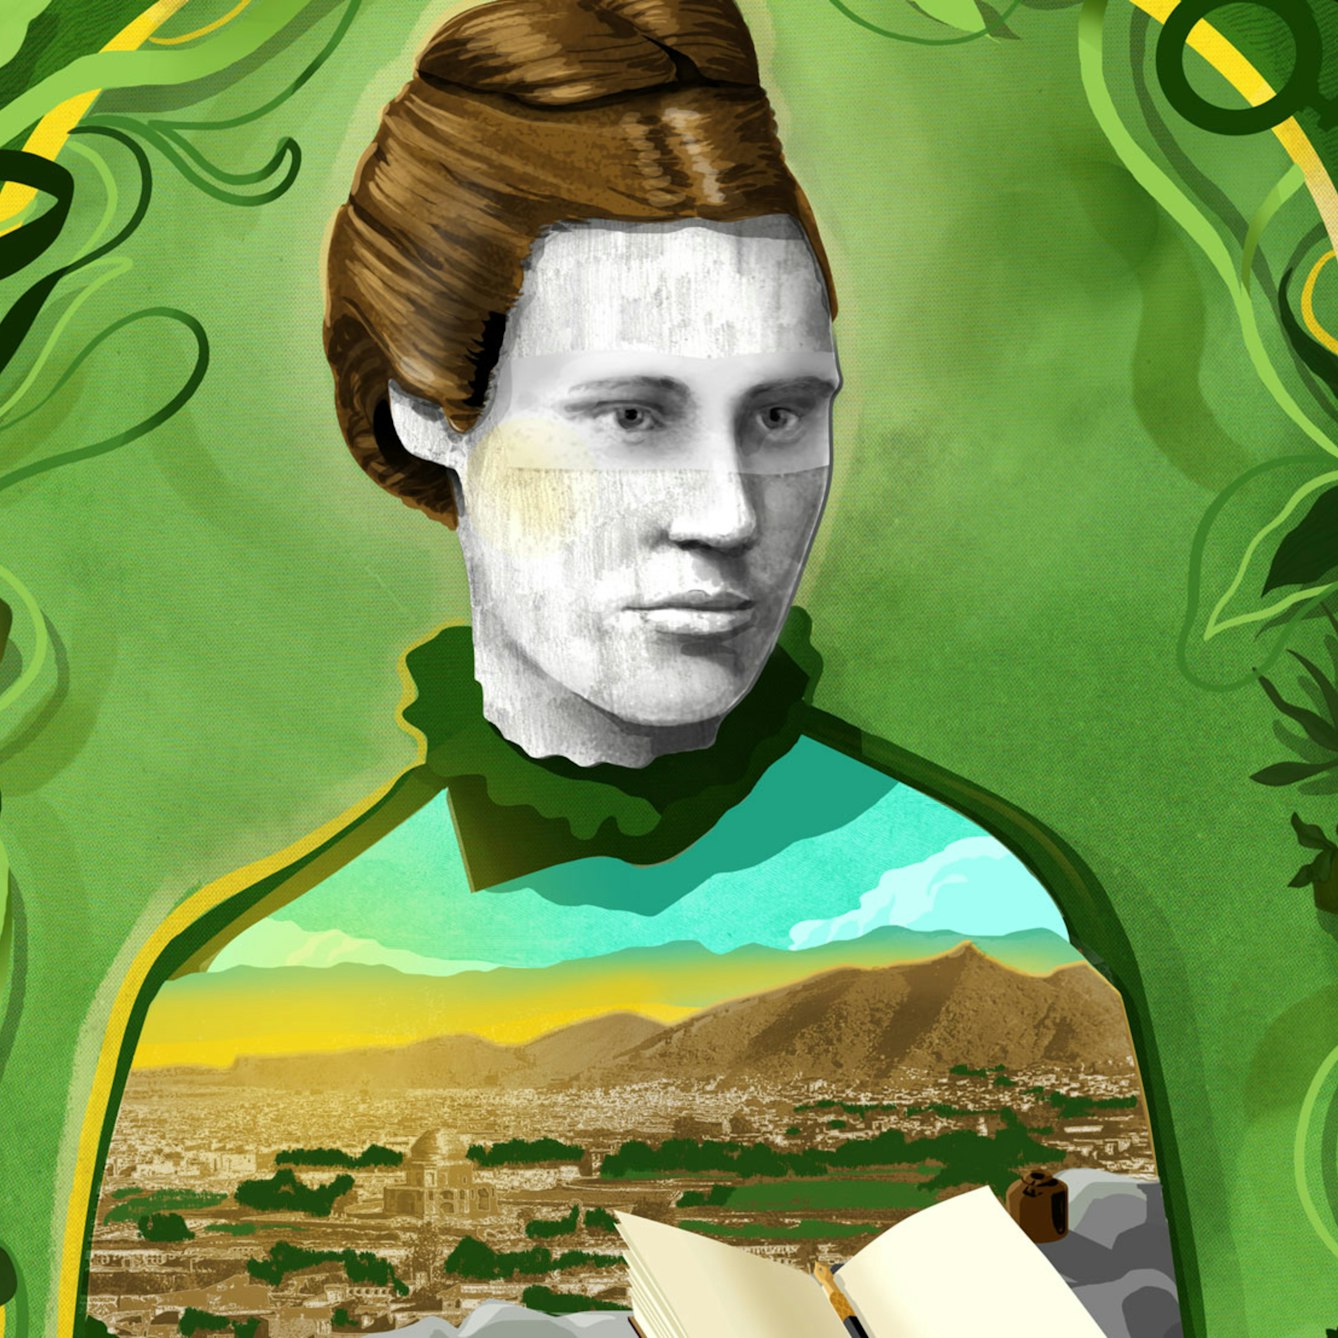 Illustration of Lillias Hamilton surrounded by greenery.